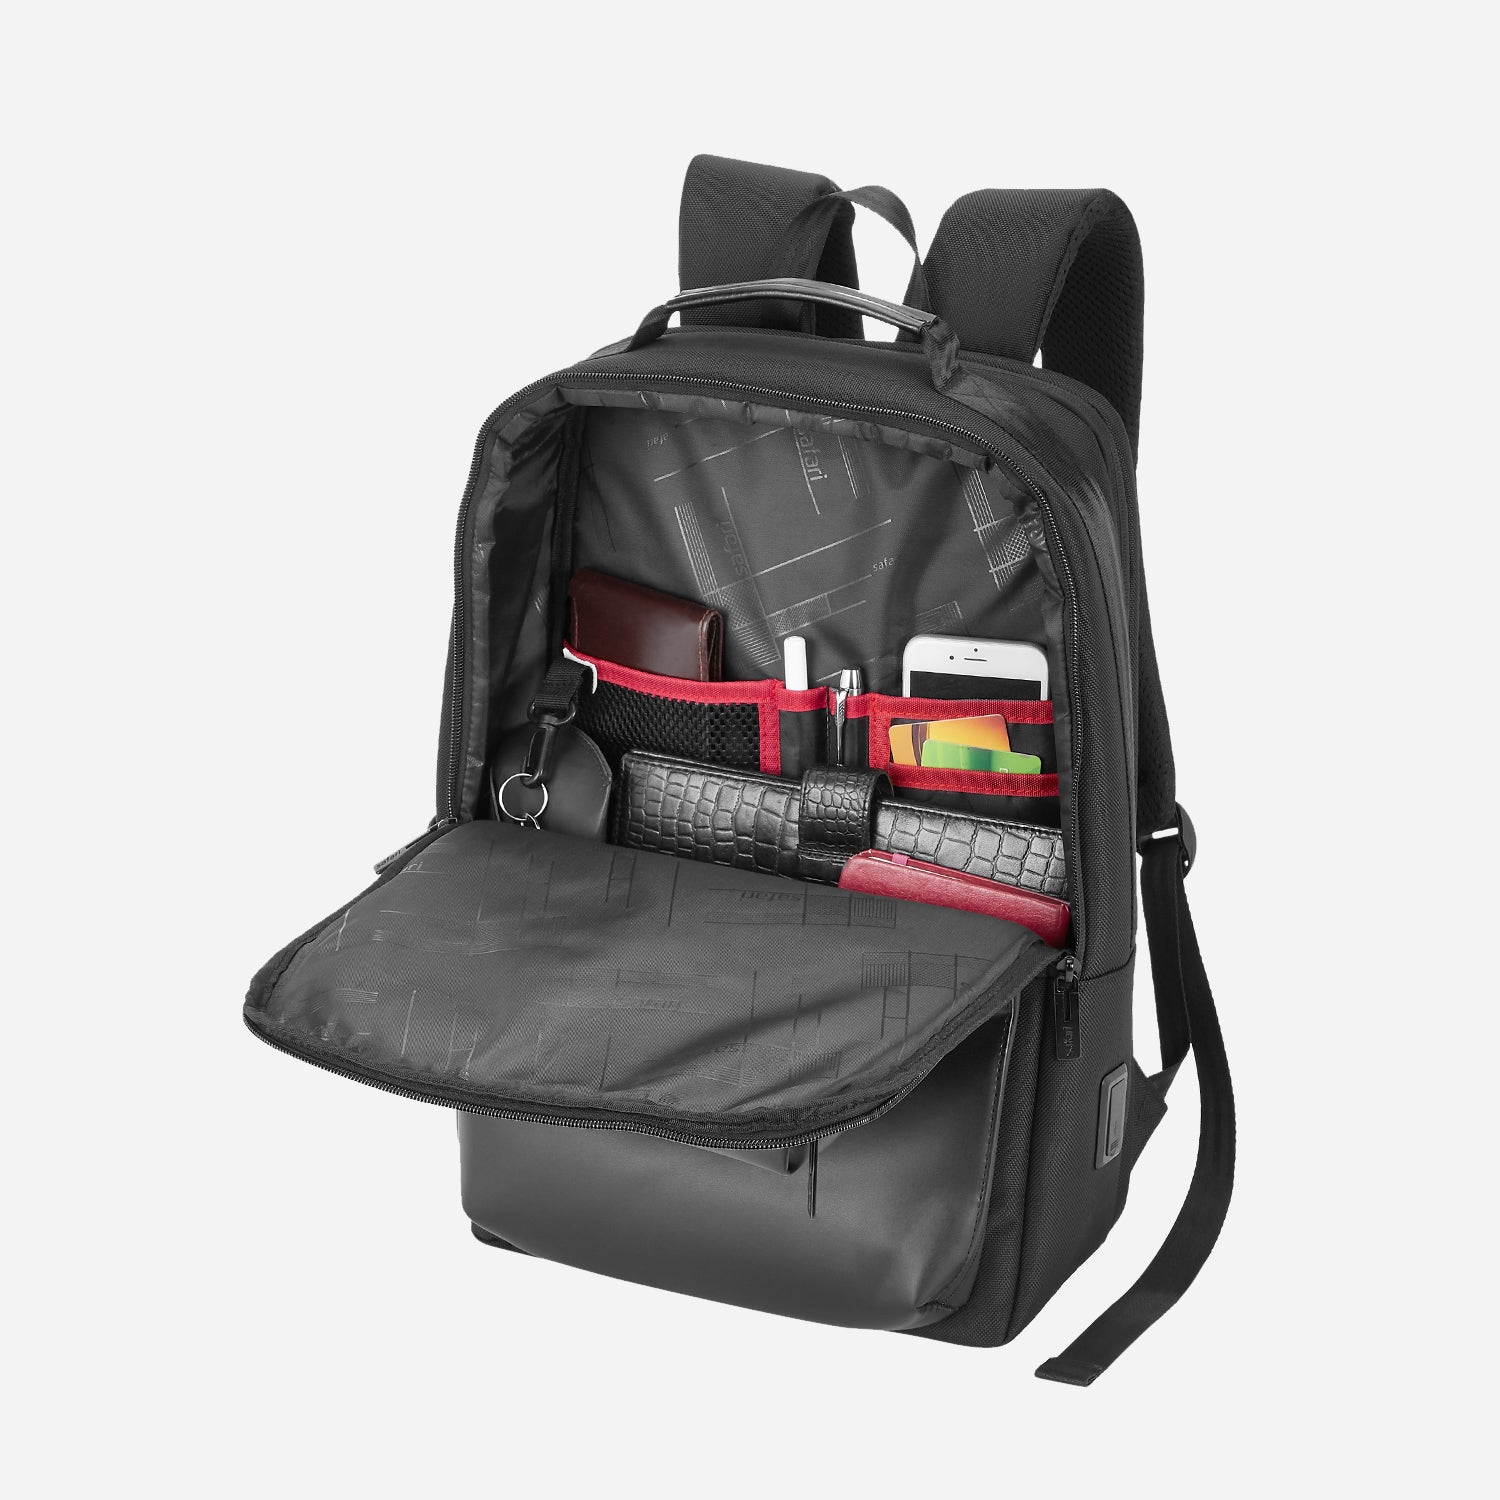 Safari Ritz 16L Black Formal Backpack with USB Port, Hidden Pockets, and Trolley Sleeve